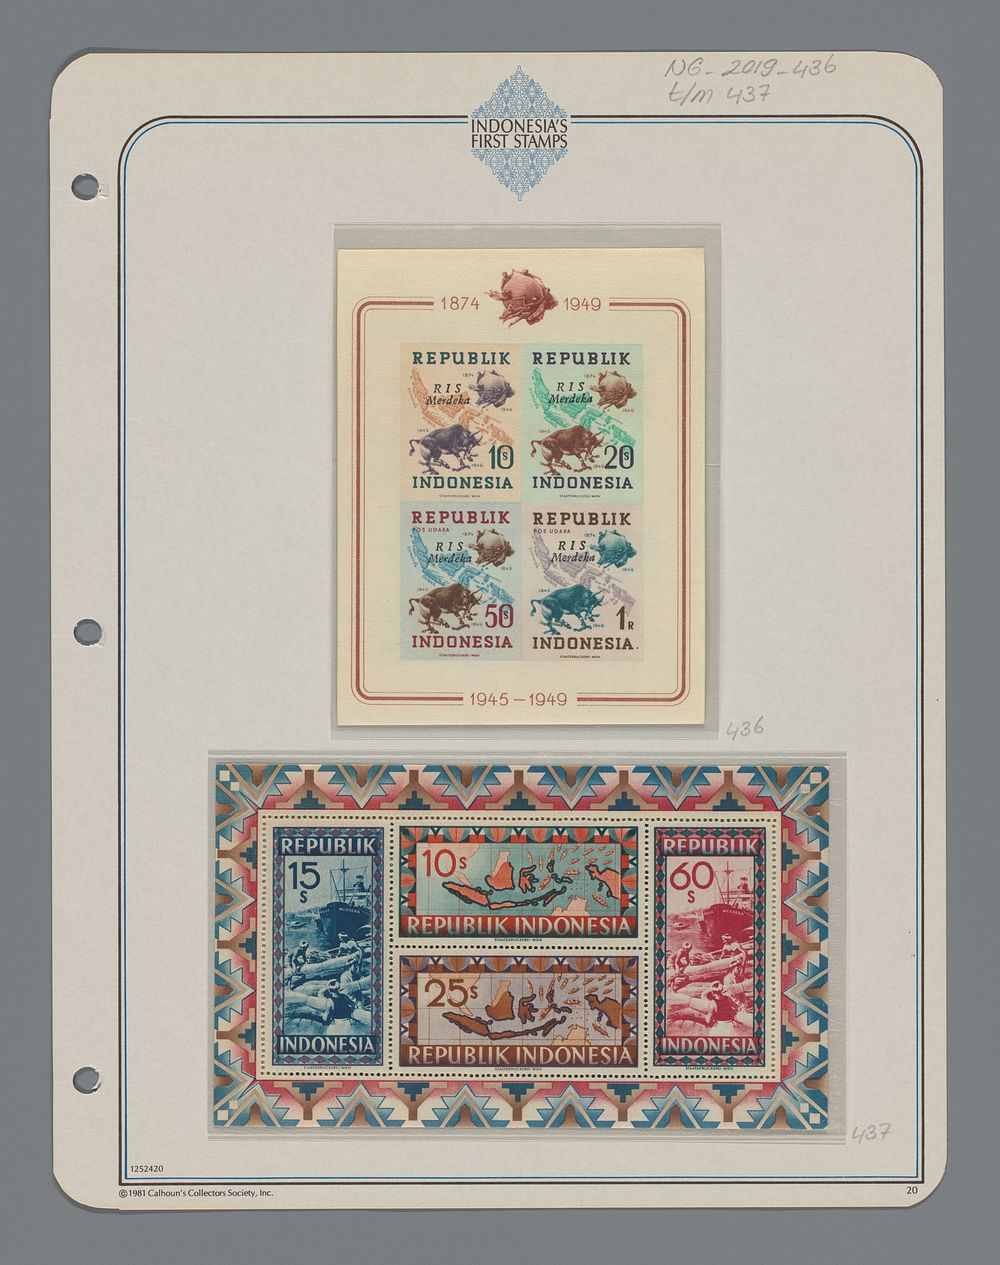 Postzegel Republik Indonesia (1949) by Staatsdruckerei Wien and E A Wright Bank Note Company